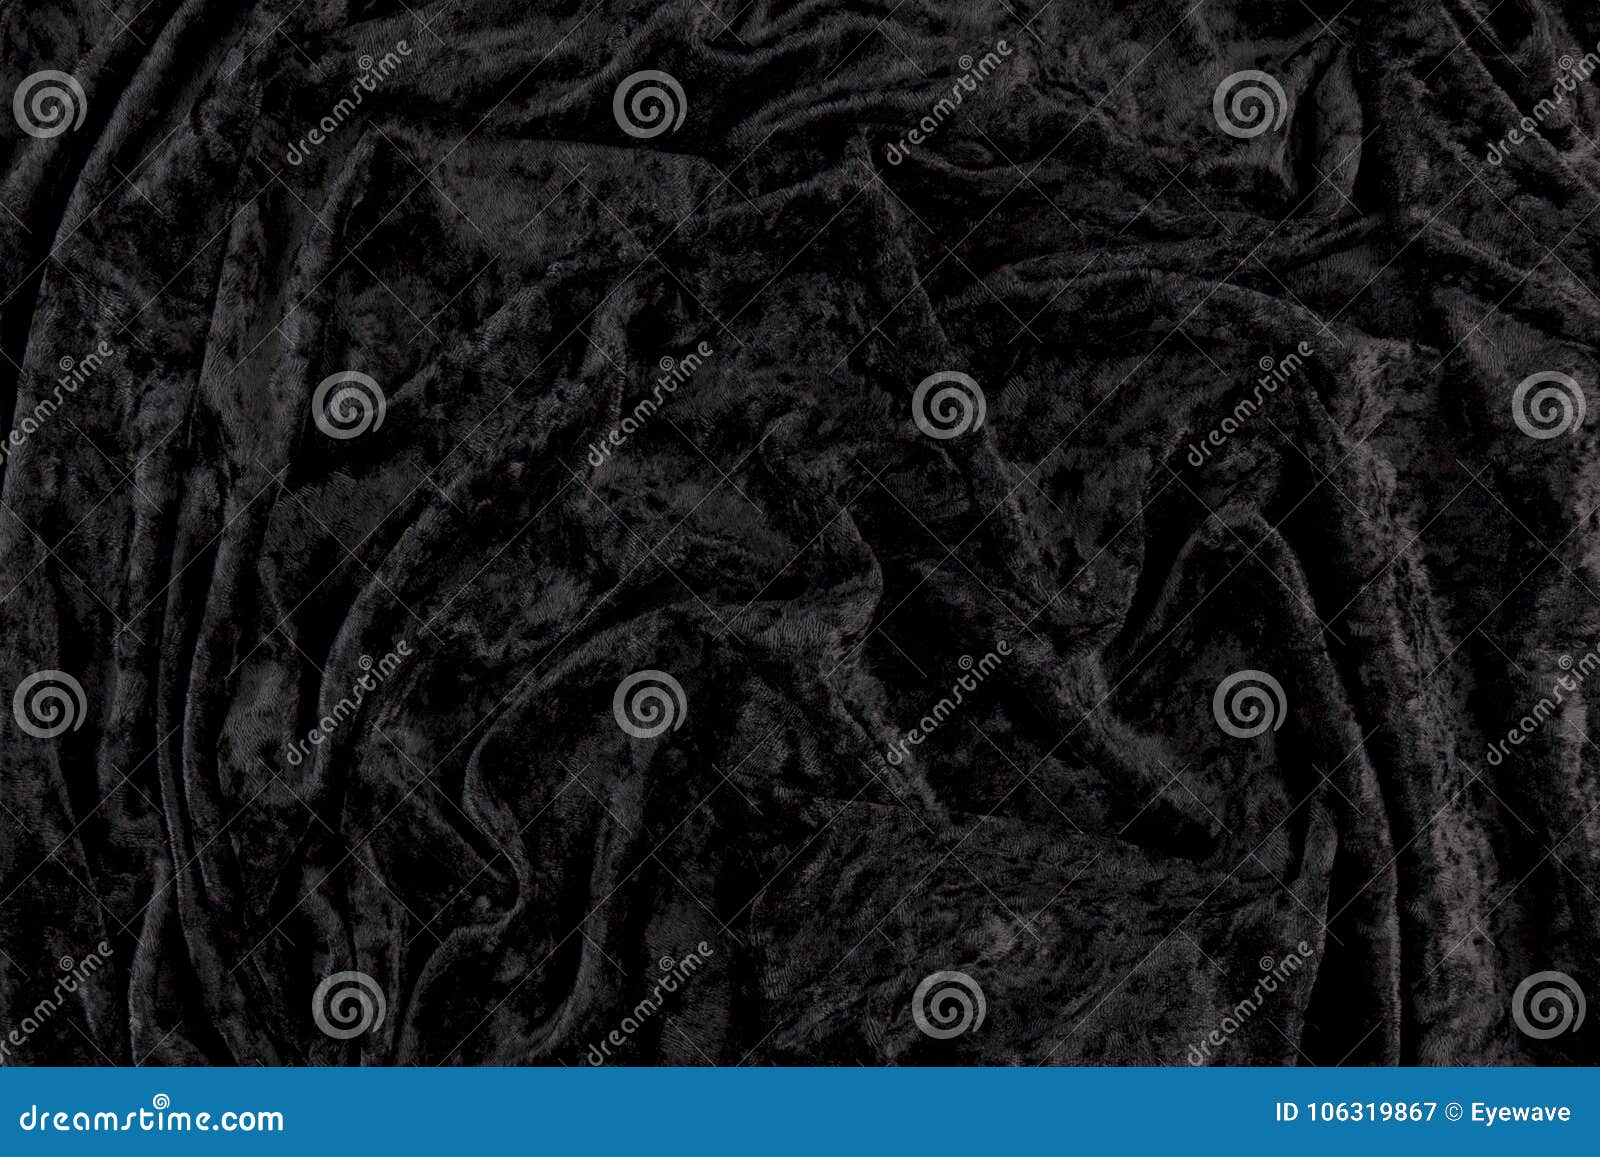 Black Velvet Cloth Background with Wrinkles Stock Image - Image of cloth,  background: 106319867